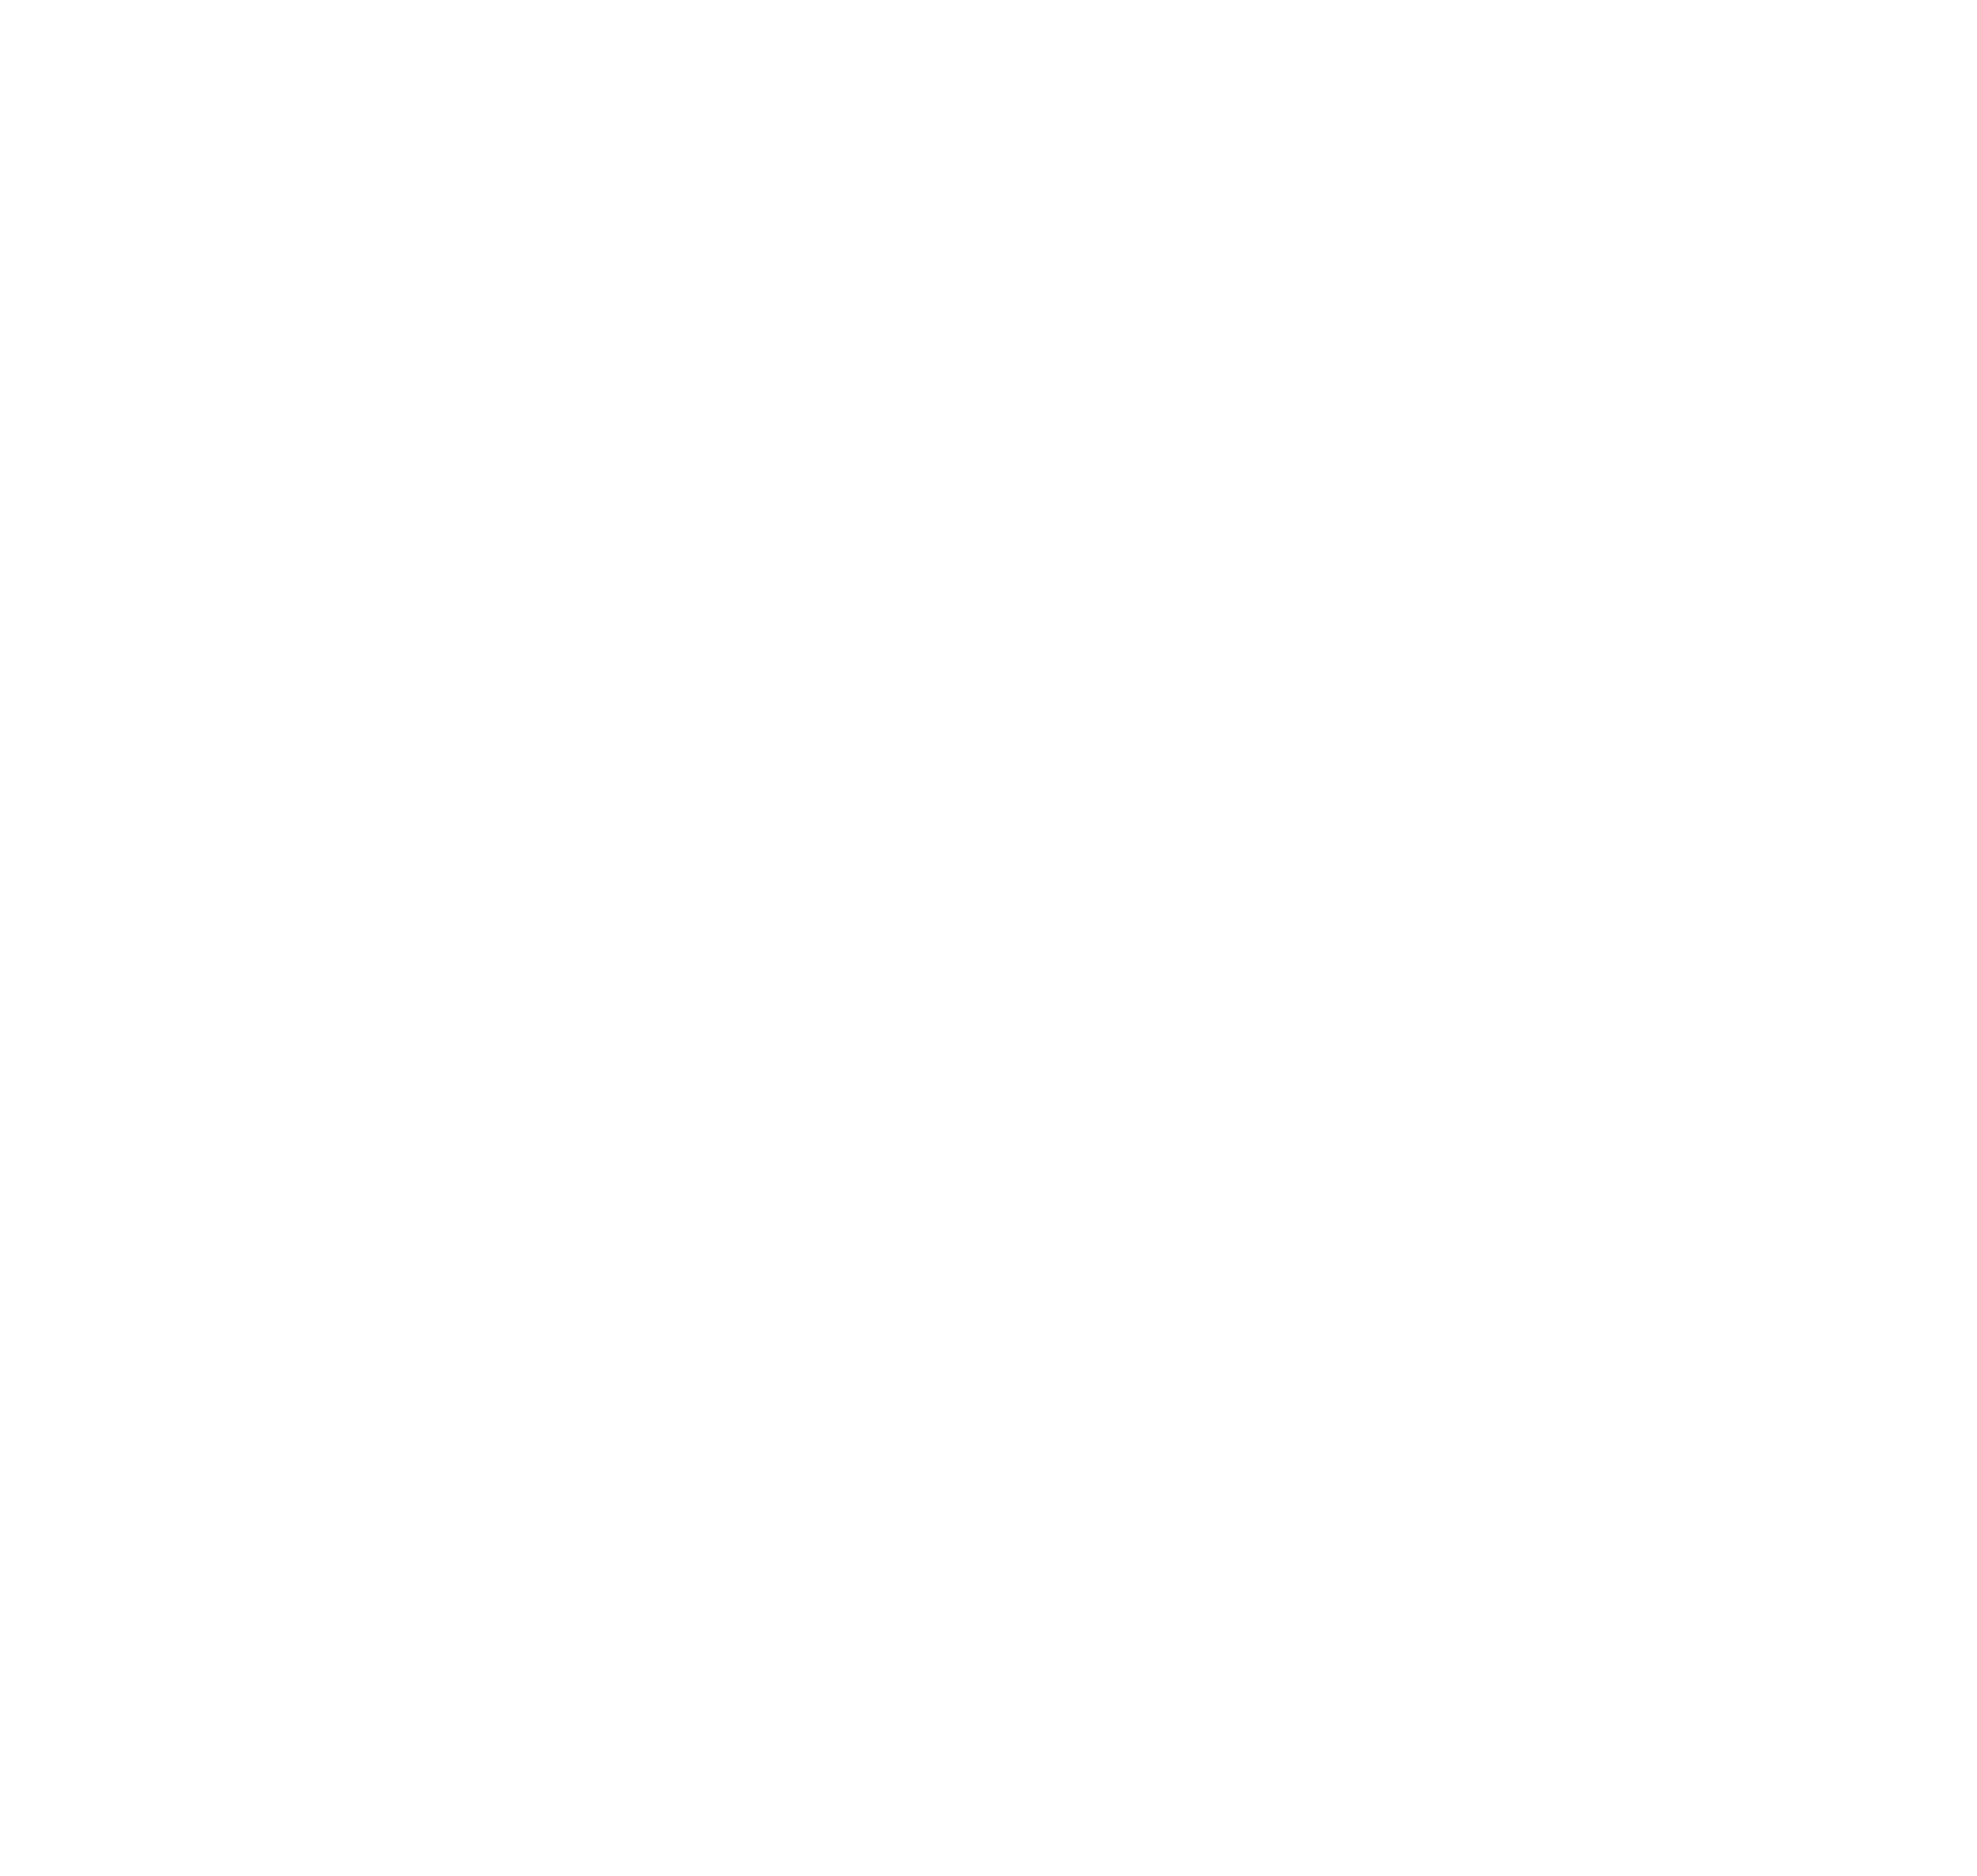 zalo-1-logo-black-and-white